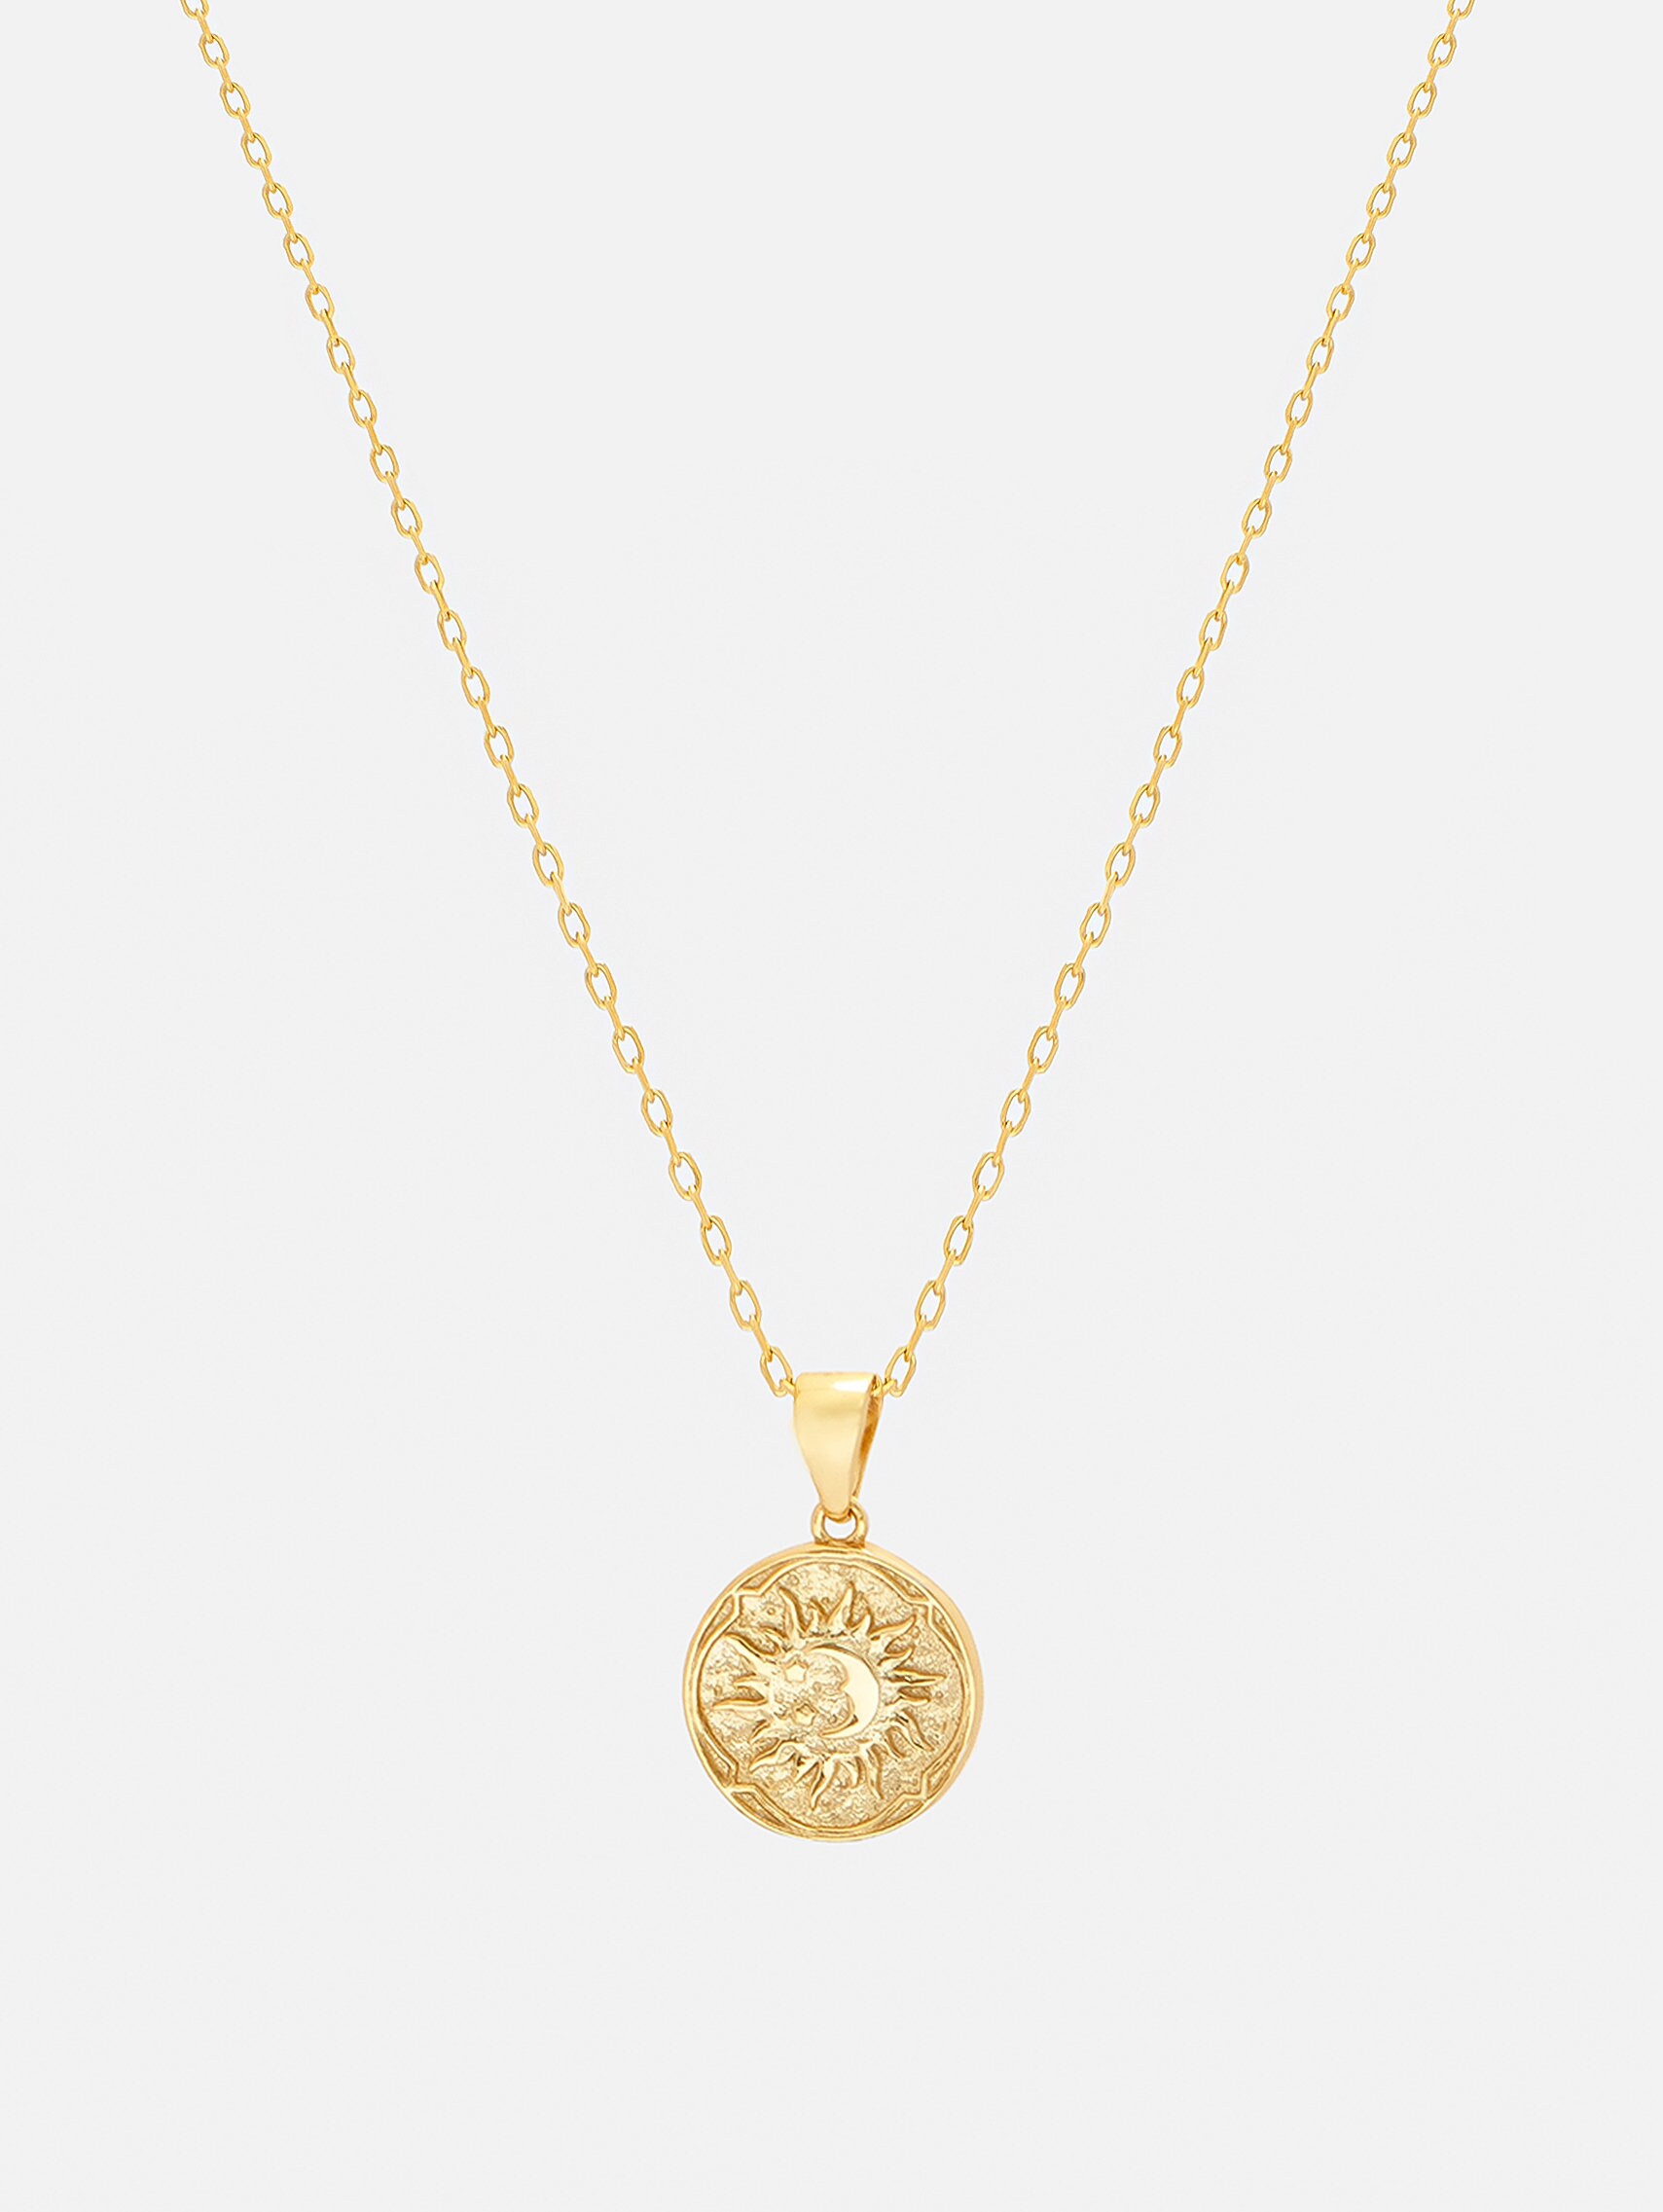 Gold Sun Coin Necklace God of Sun Small Coin Pendant | Etsy